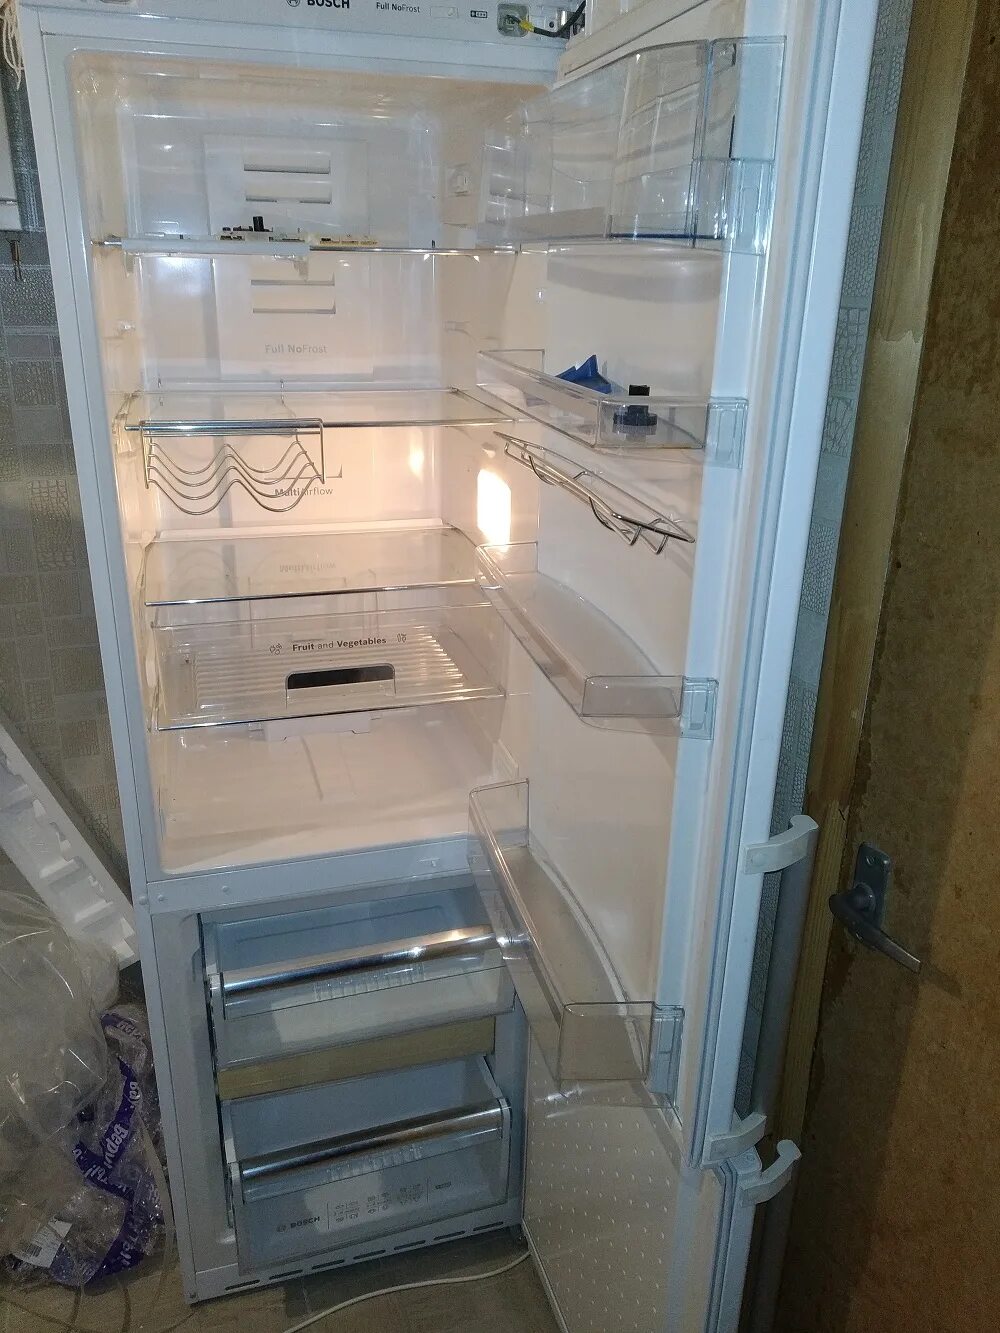 Холодильник бош Bosch kgn36x25. Kgn36a25 01 холодильник бош. Холодильник Bosch kgn36x25/1. Холодильник Bosch kgn36a25/01,kgn36x25/01. Край холодильников купить бу